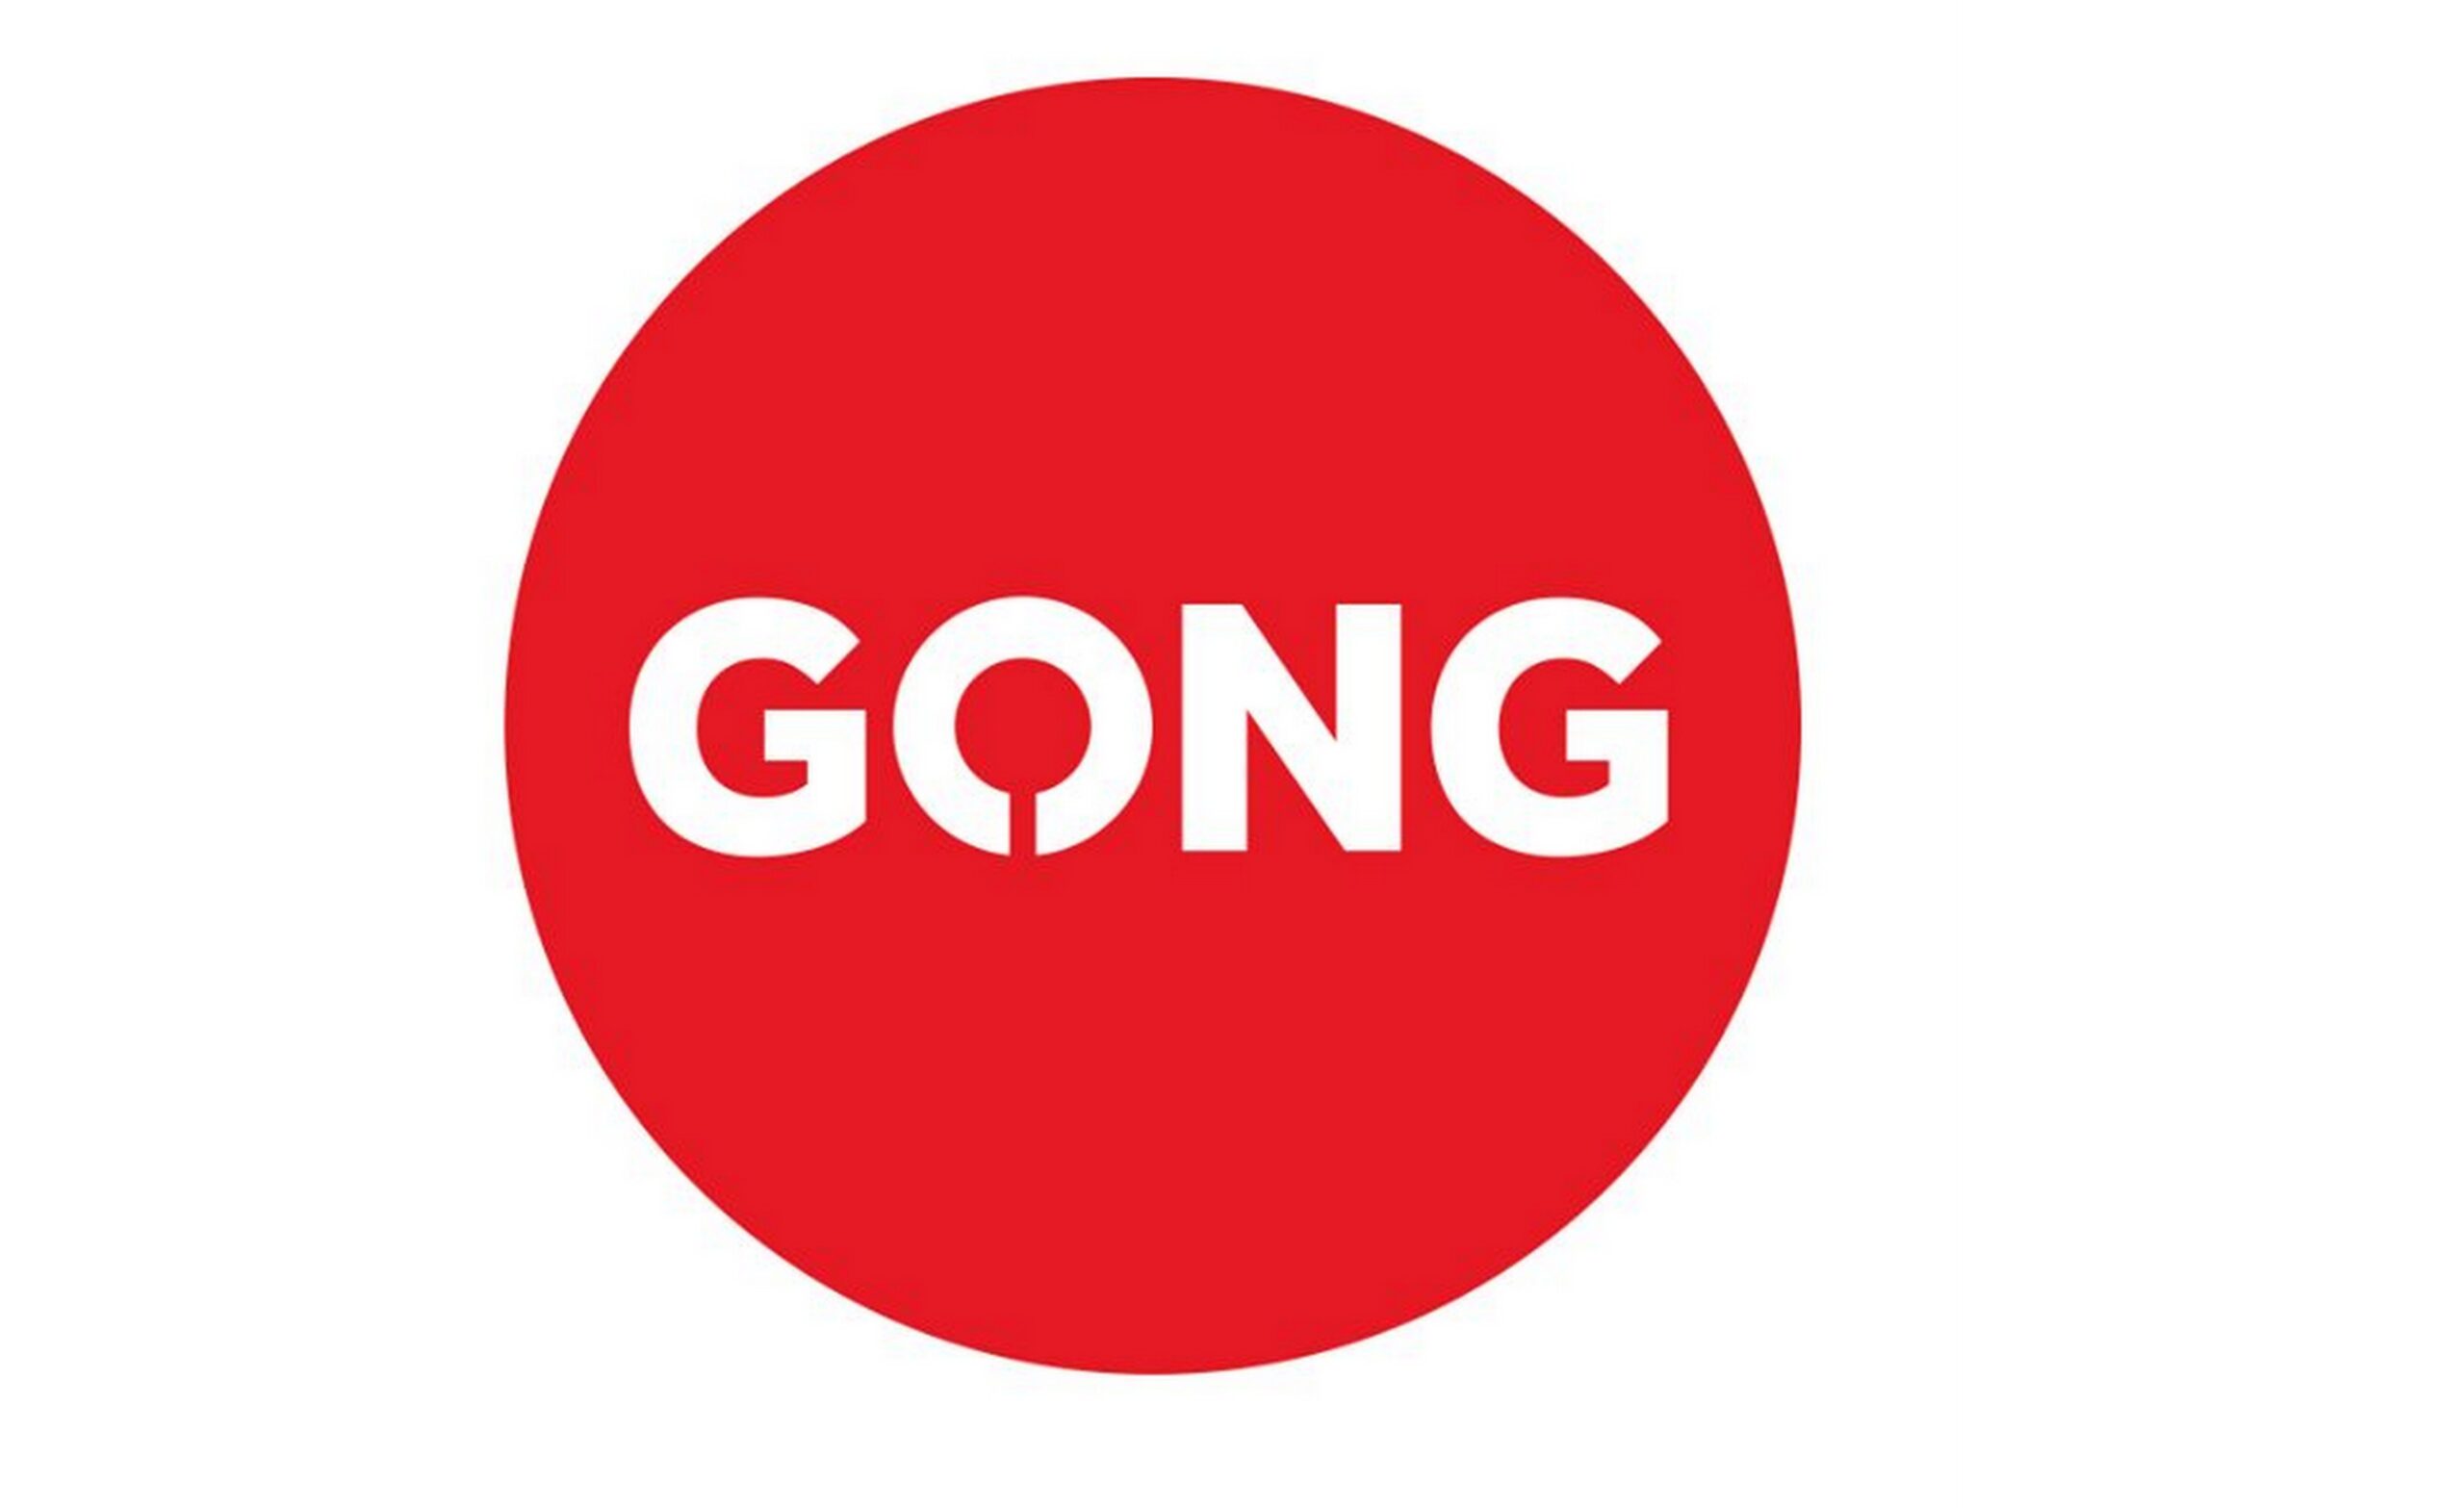 Agencja GONG z holenderskim adresem GONG mediarun com gong scaled